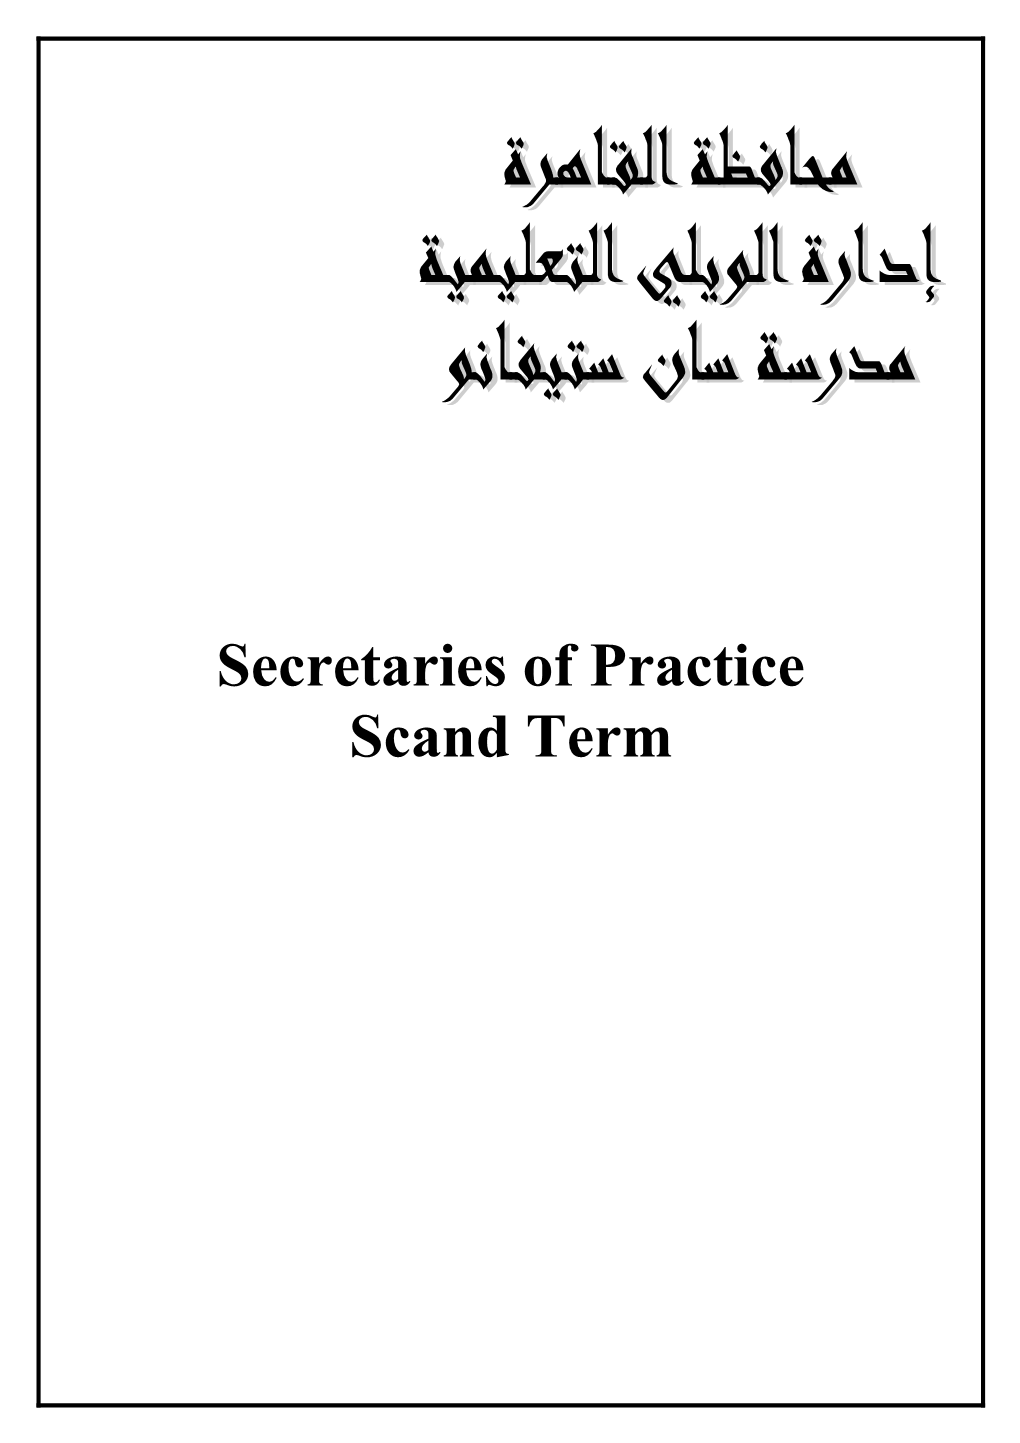 Secretaries of Practice Scand Term